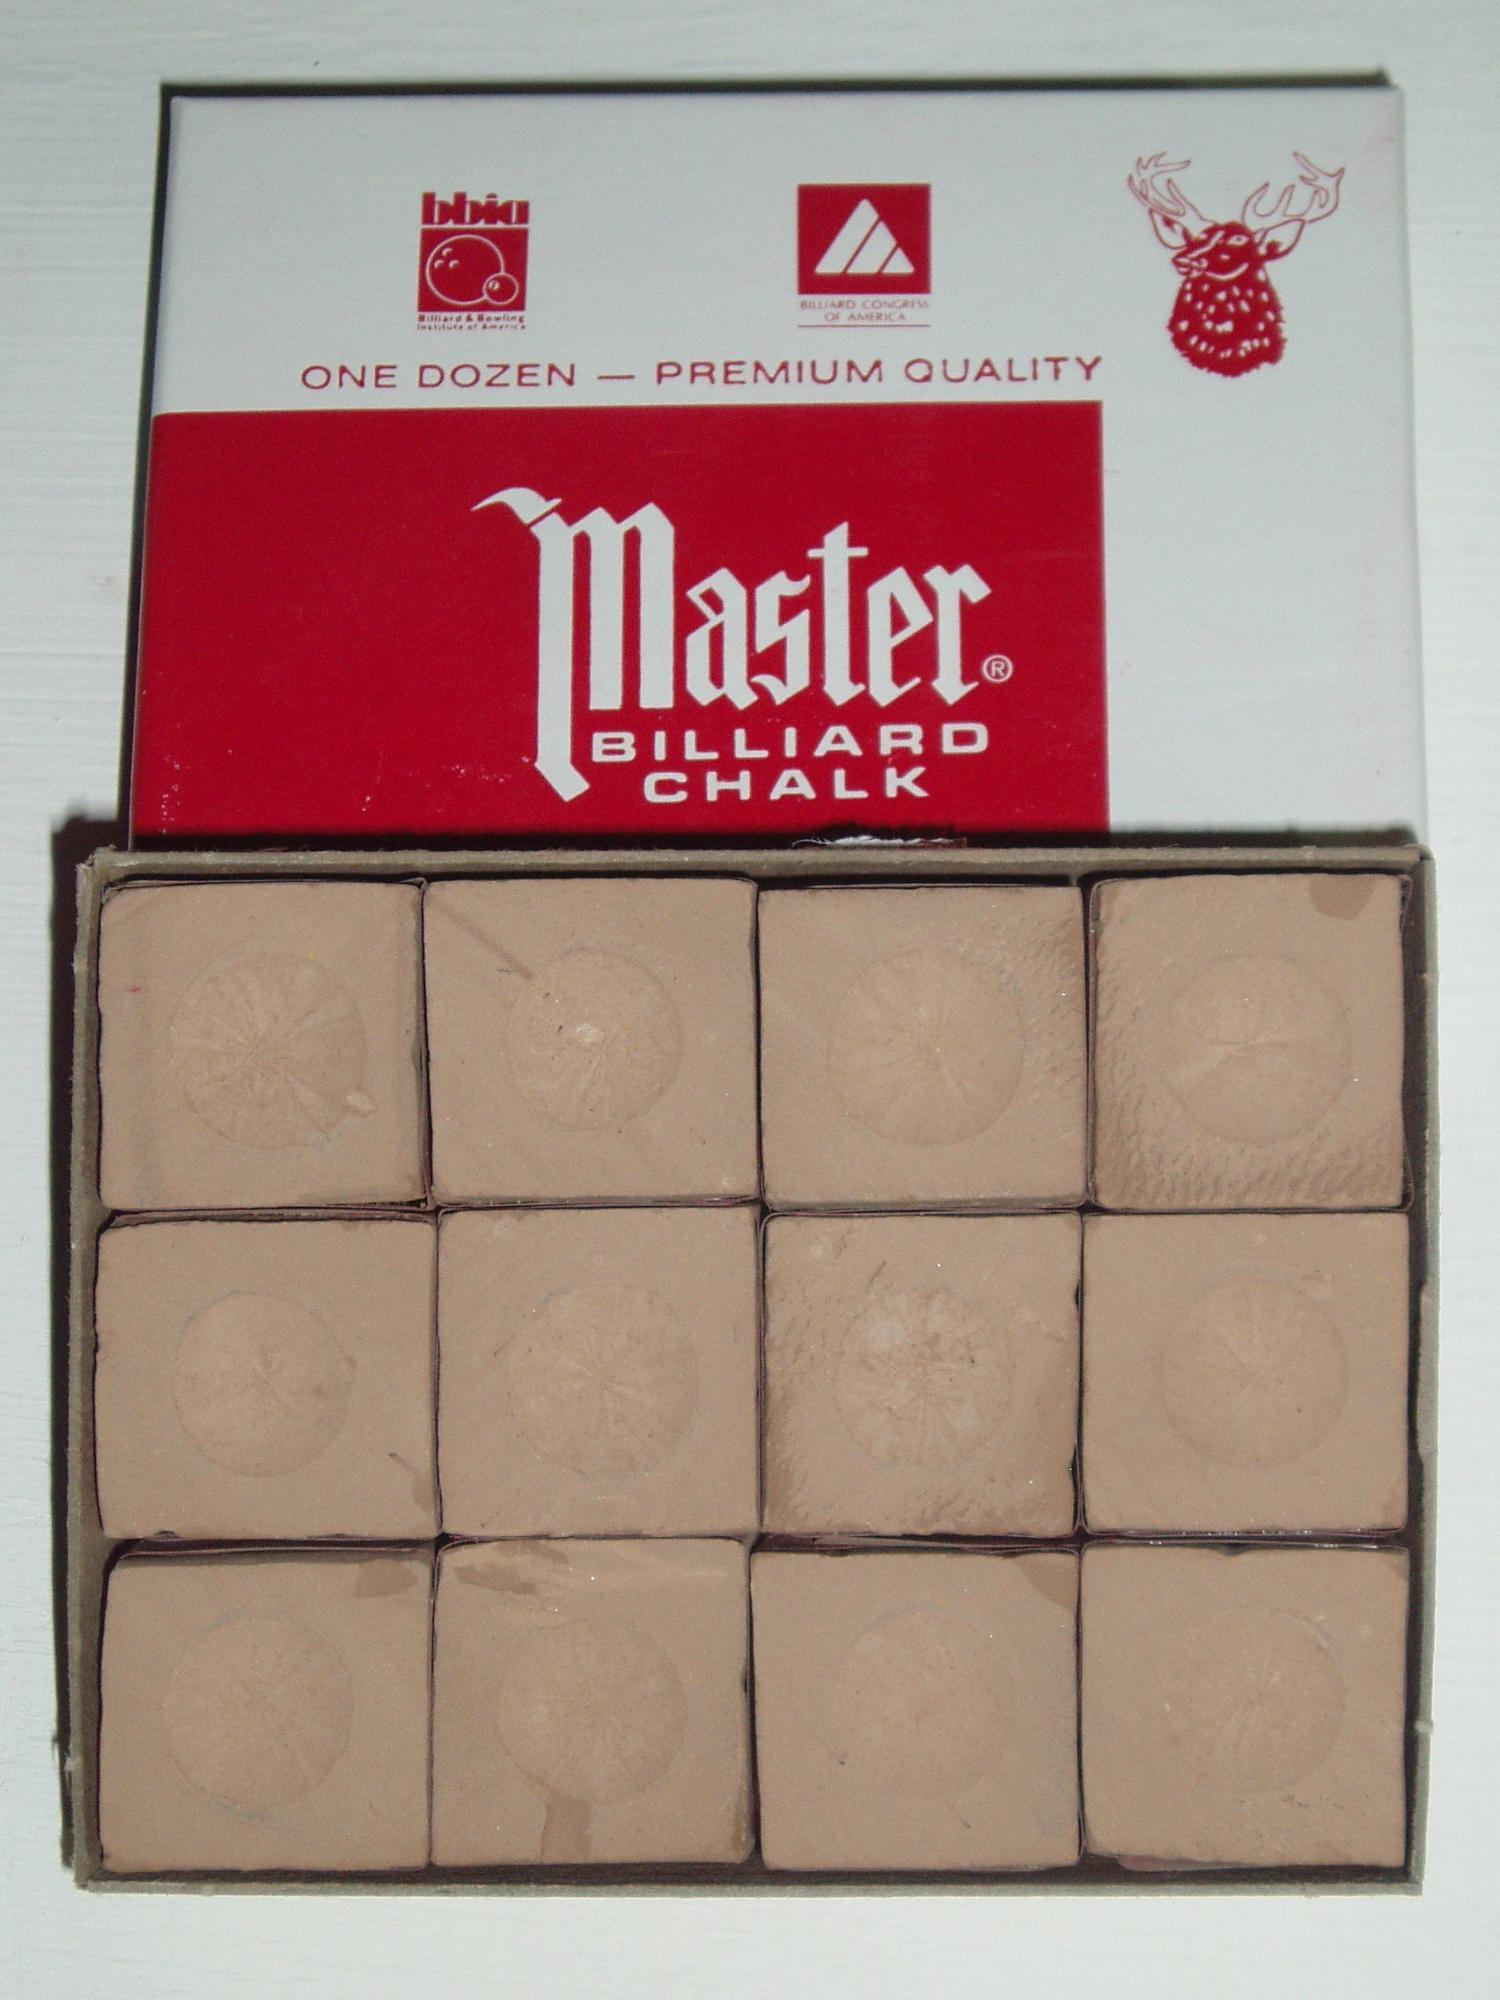 Master billiard chalk box 12 pieces